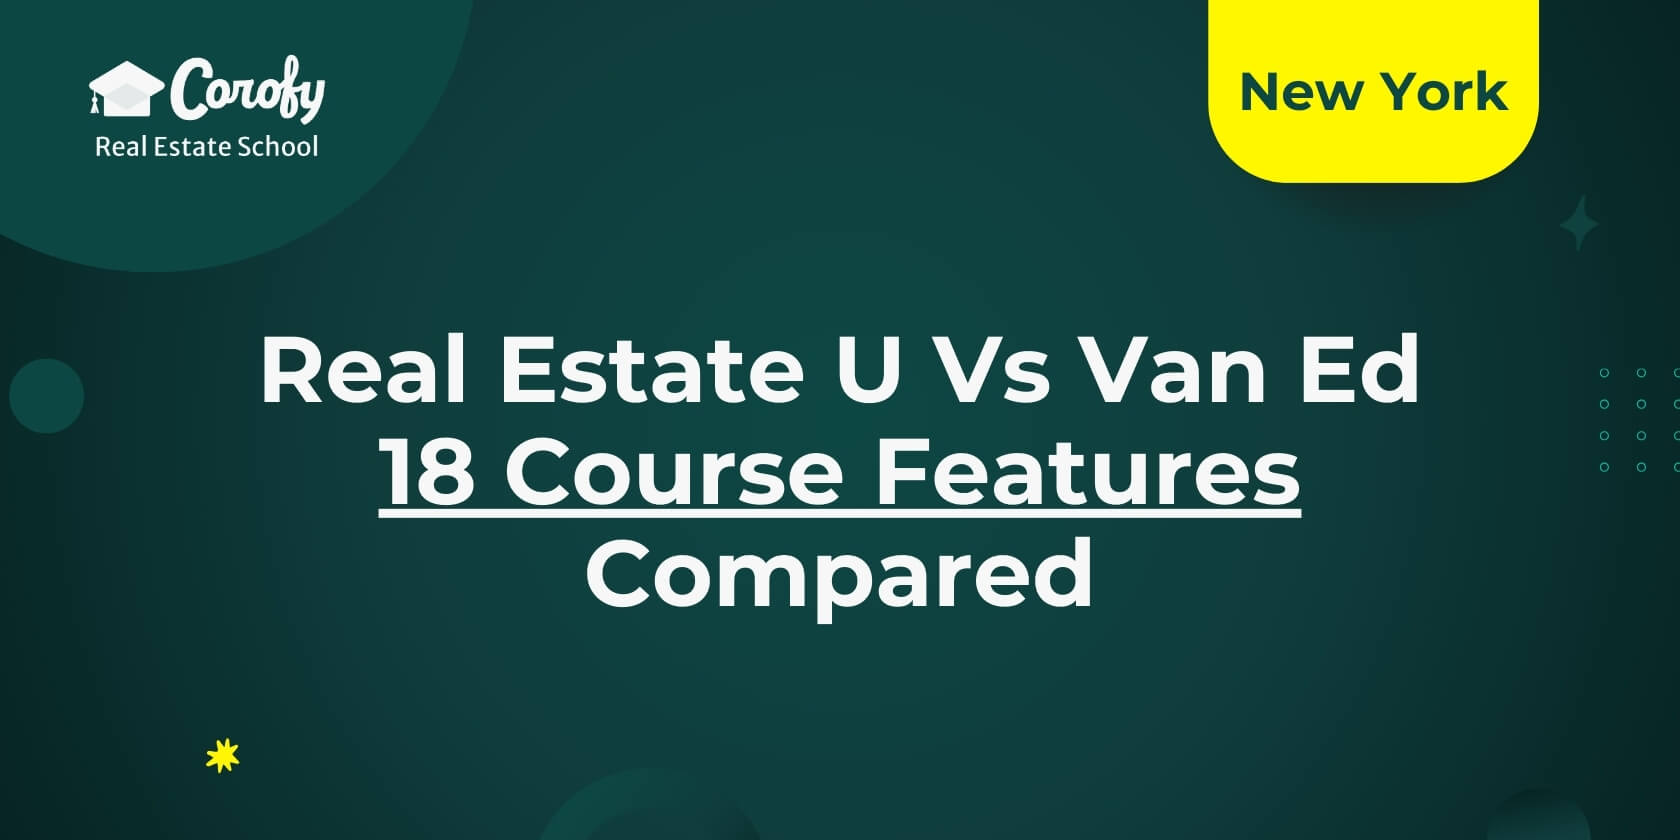 Real Estate U vs Van Ed - 18 Course Features Compared